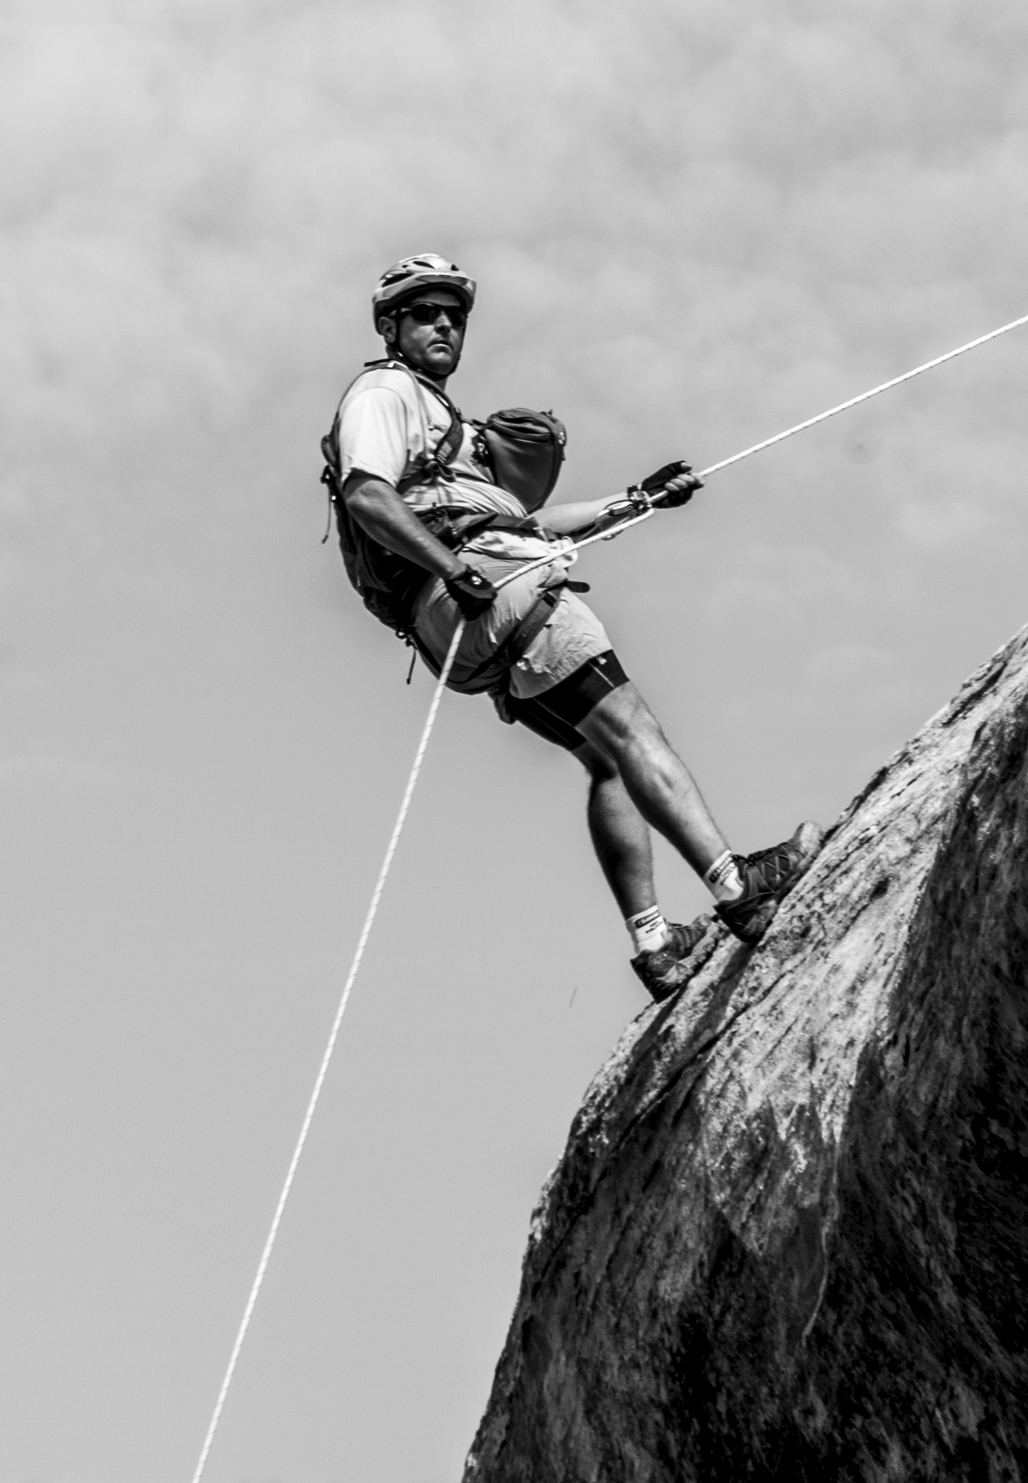 Van Brinson rappels off a sandstone cliff at the 2013 Adventure TEAM Challenge in western Colorado. Photograph by Brian Gliba.